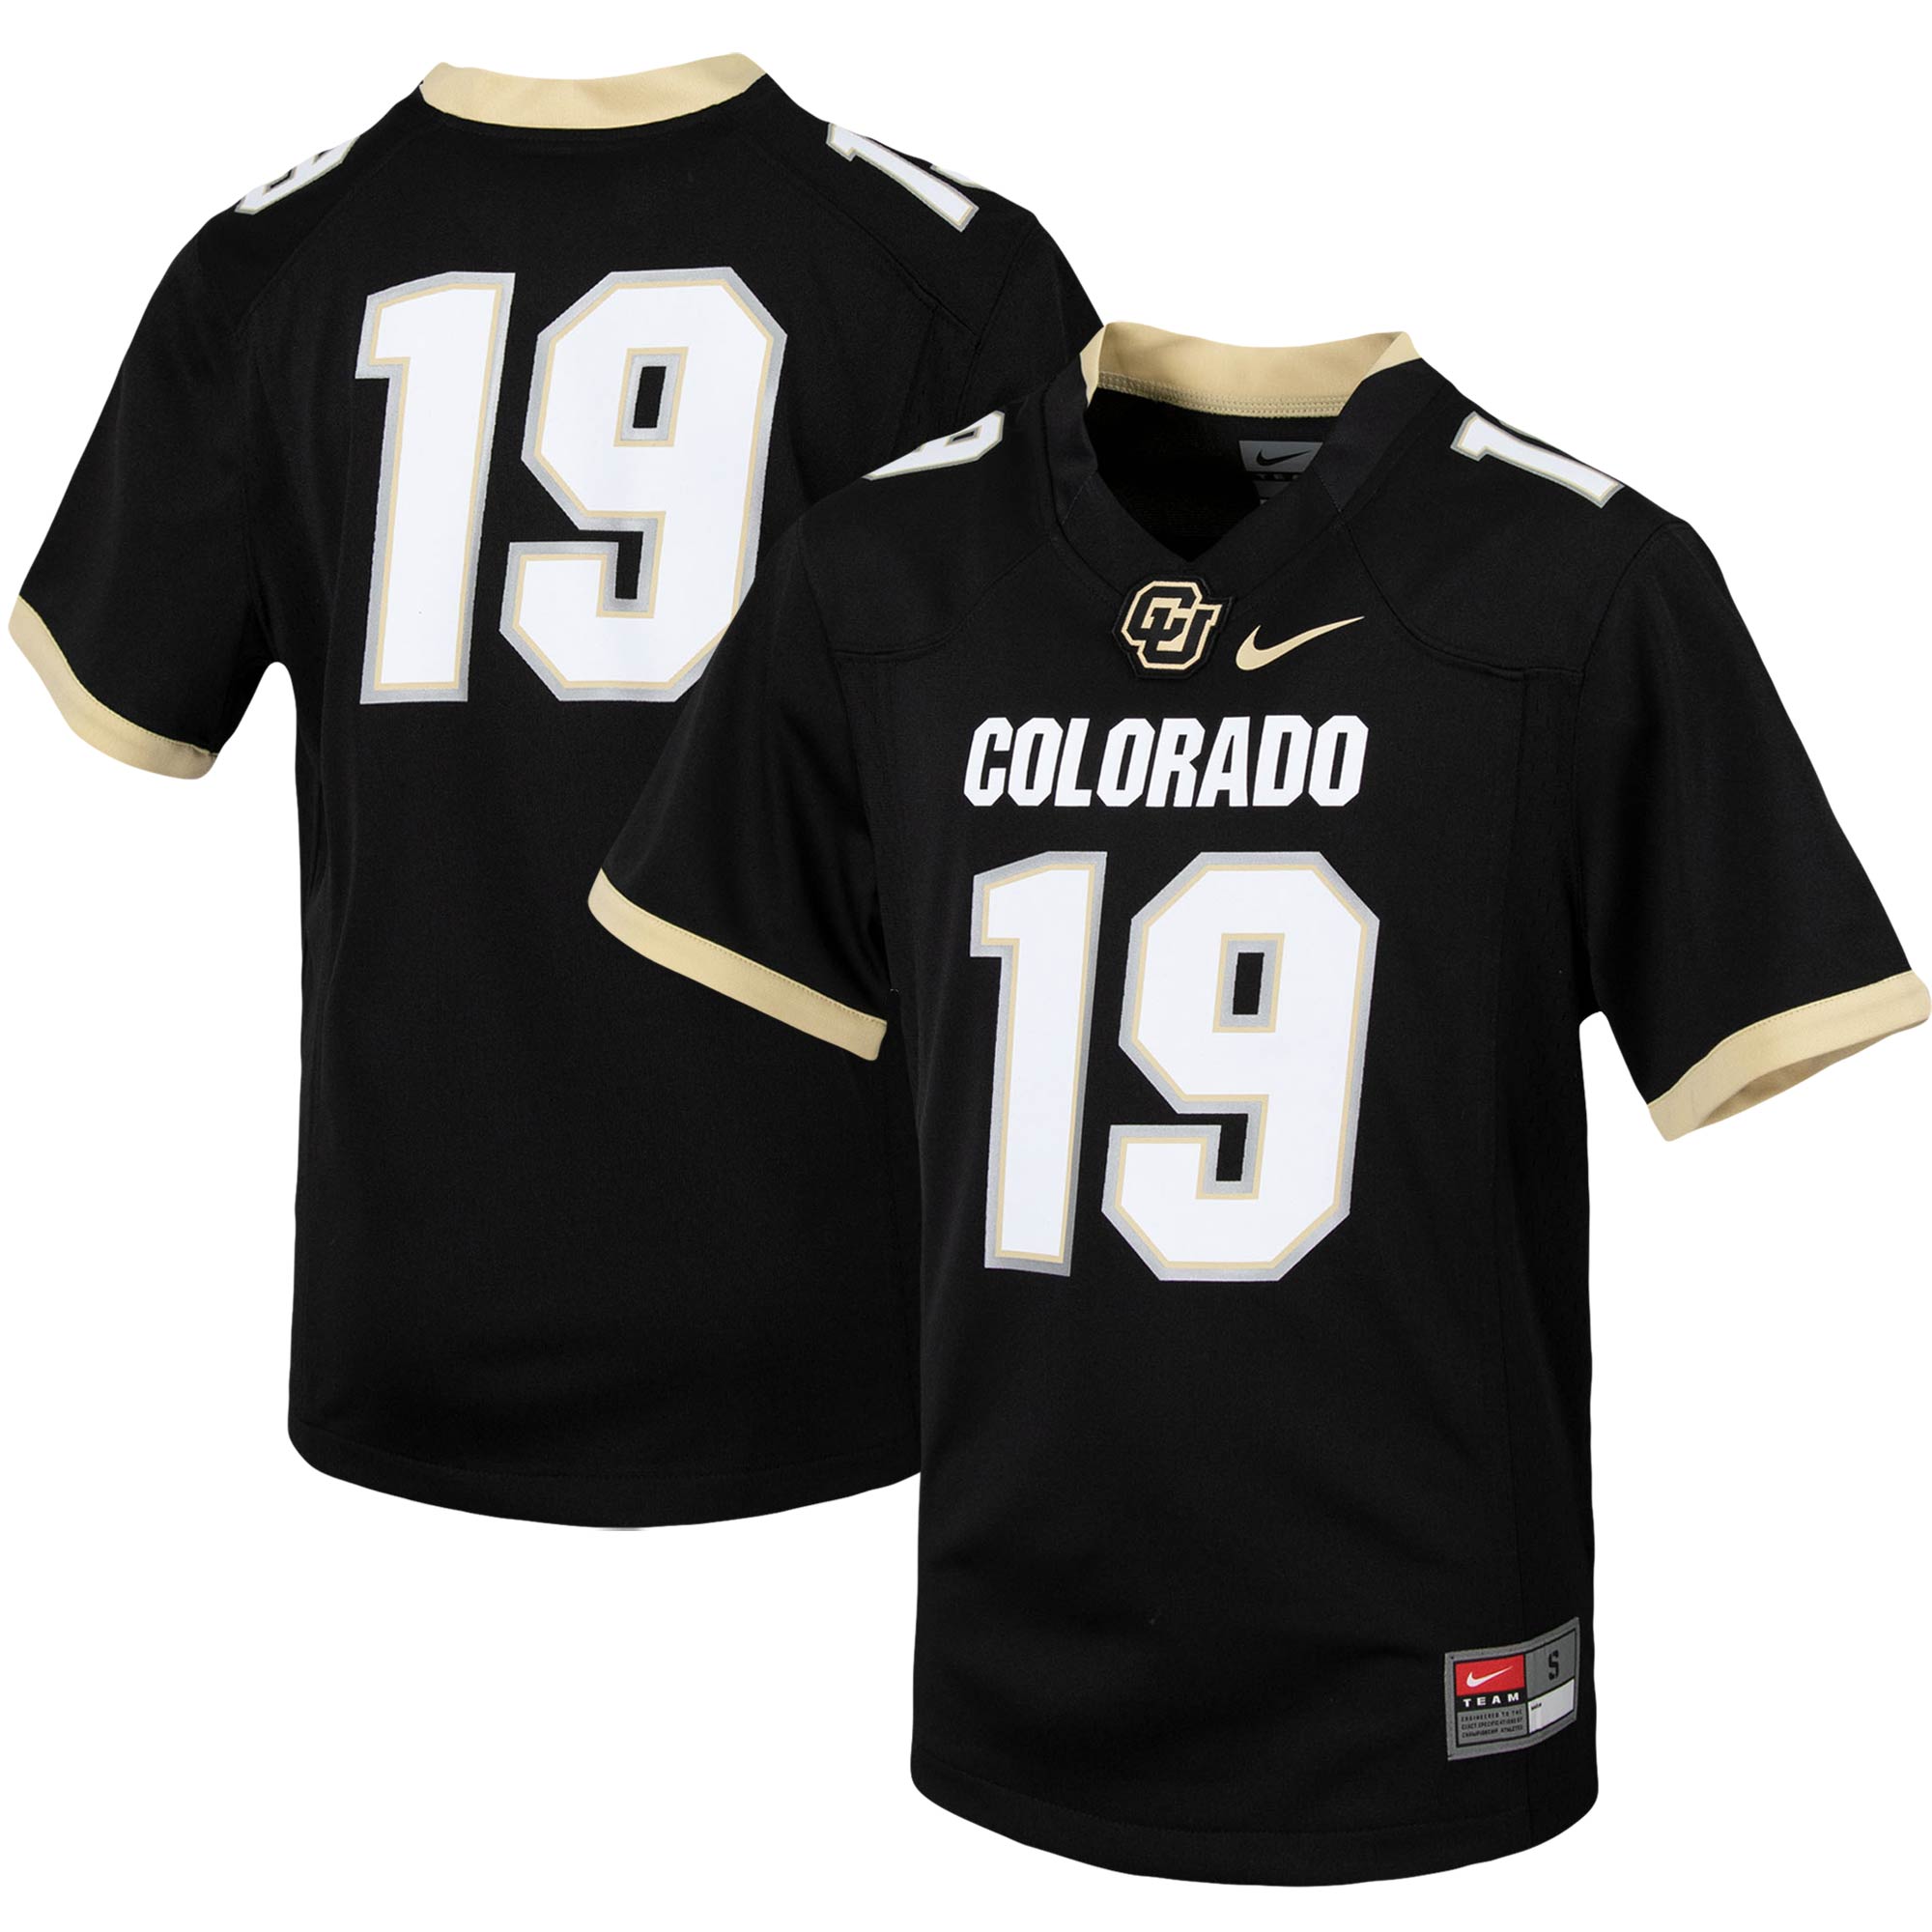 19 Colorado Buffaloes Youth Team Football Jersey Black Ctjersey.store